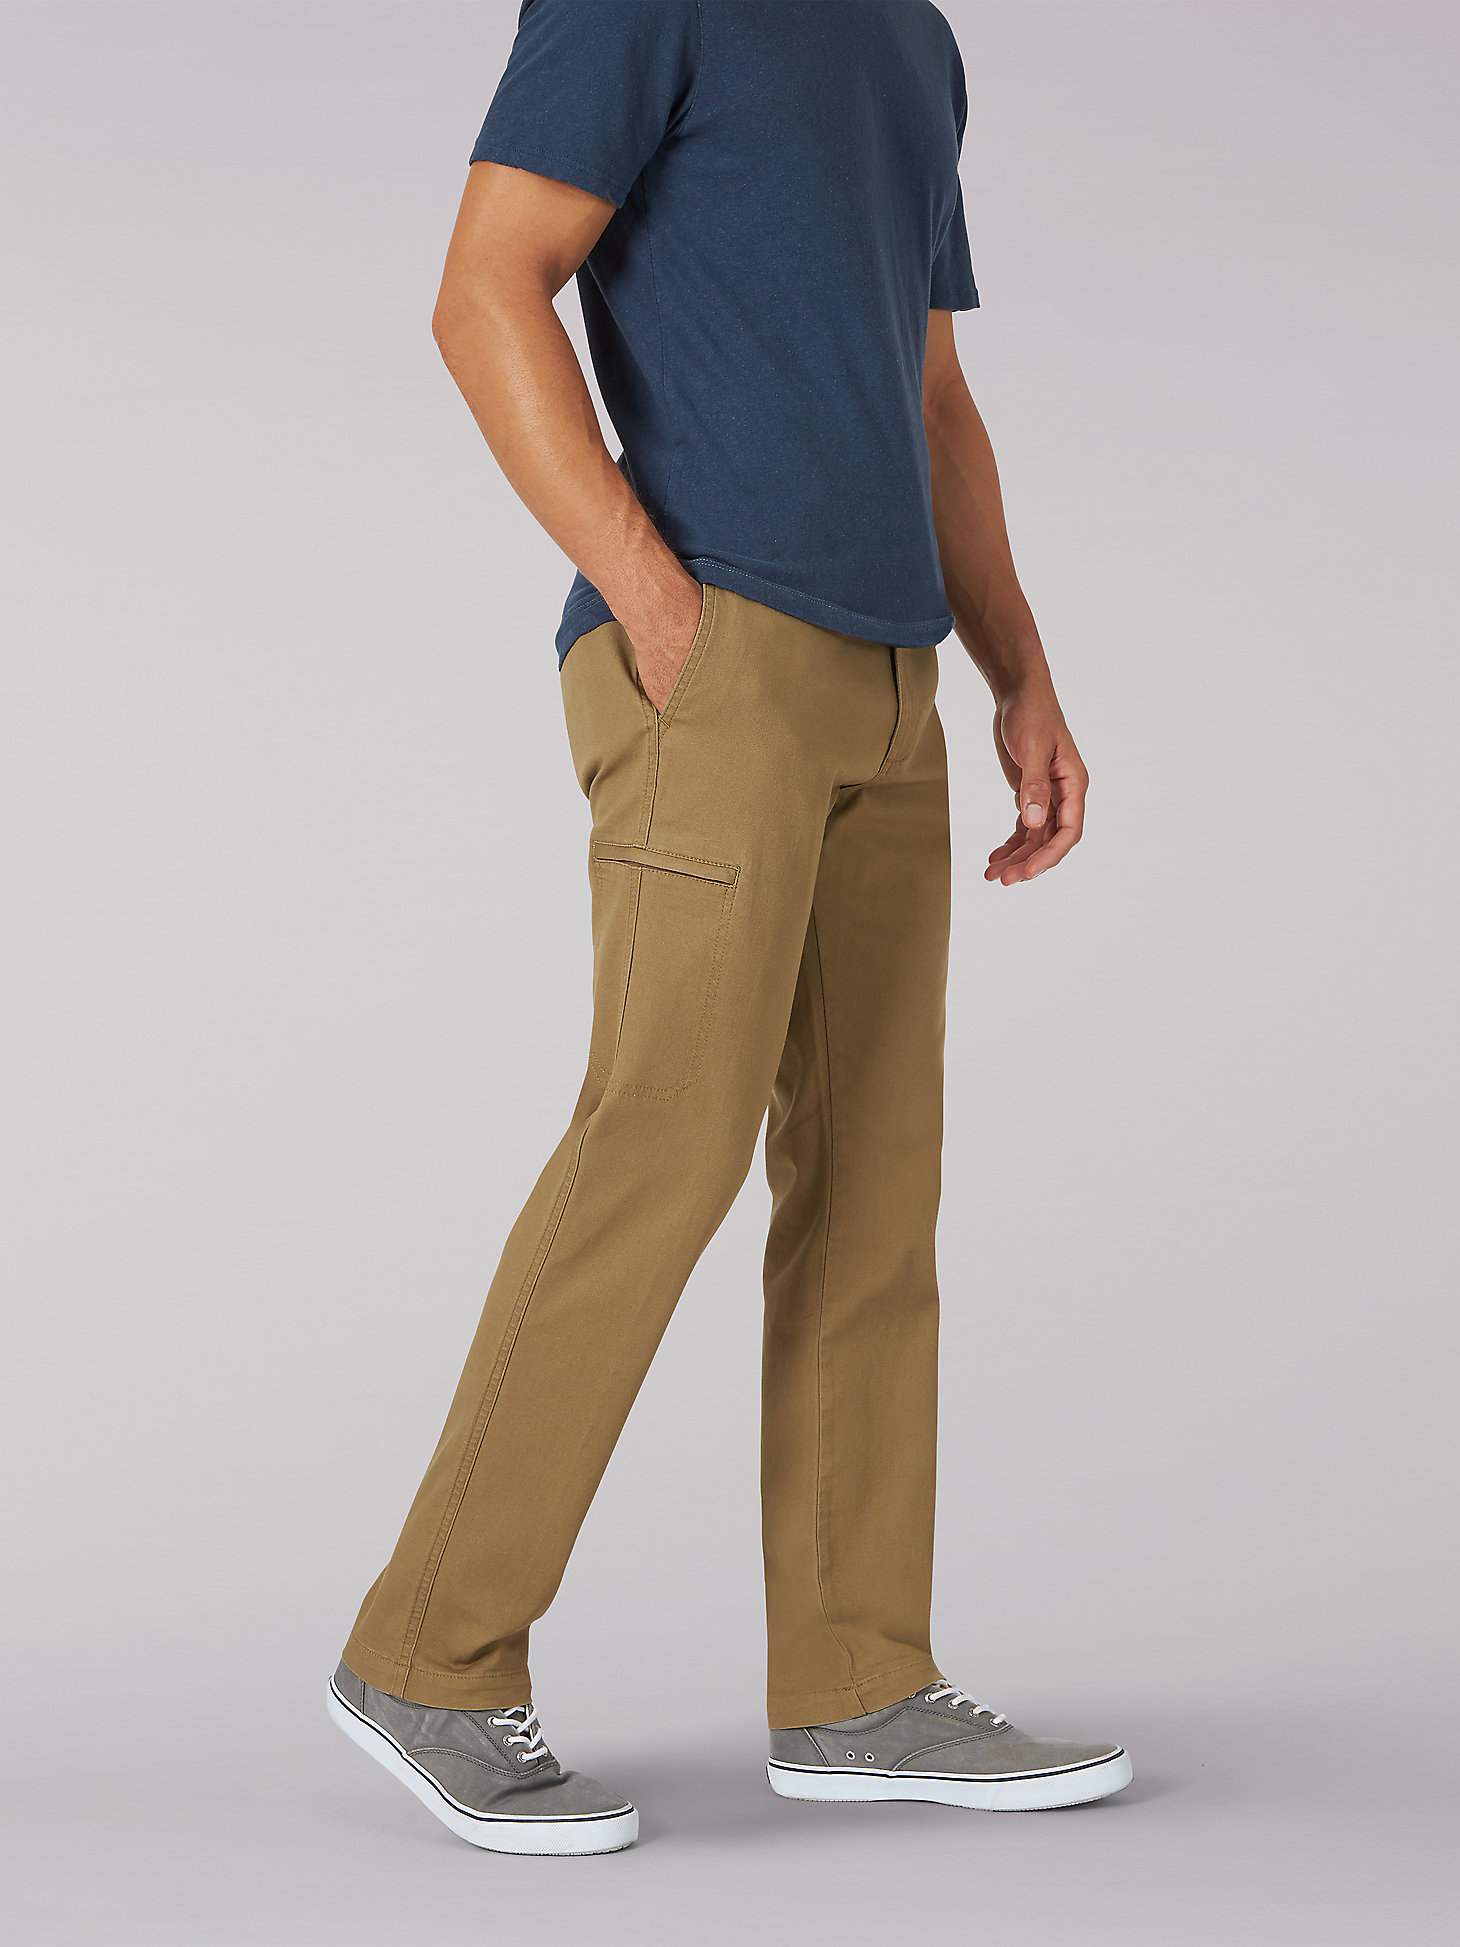 Men’s Extreme Comfort Slim Fit Cargo Pant in Bronze main view